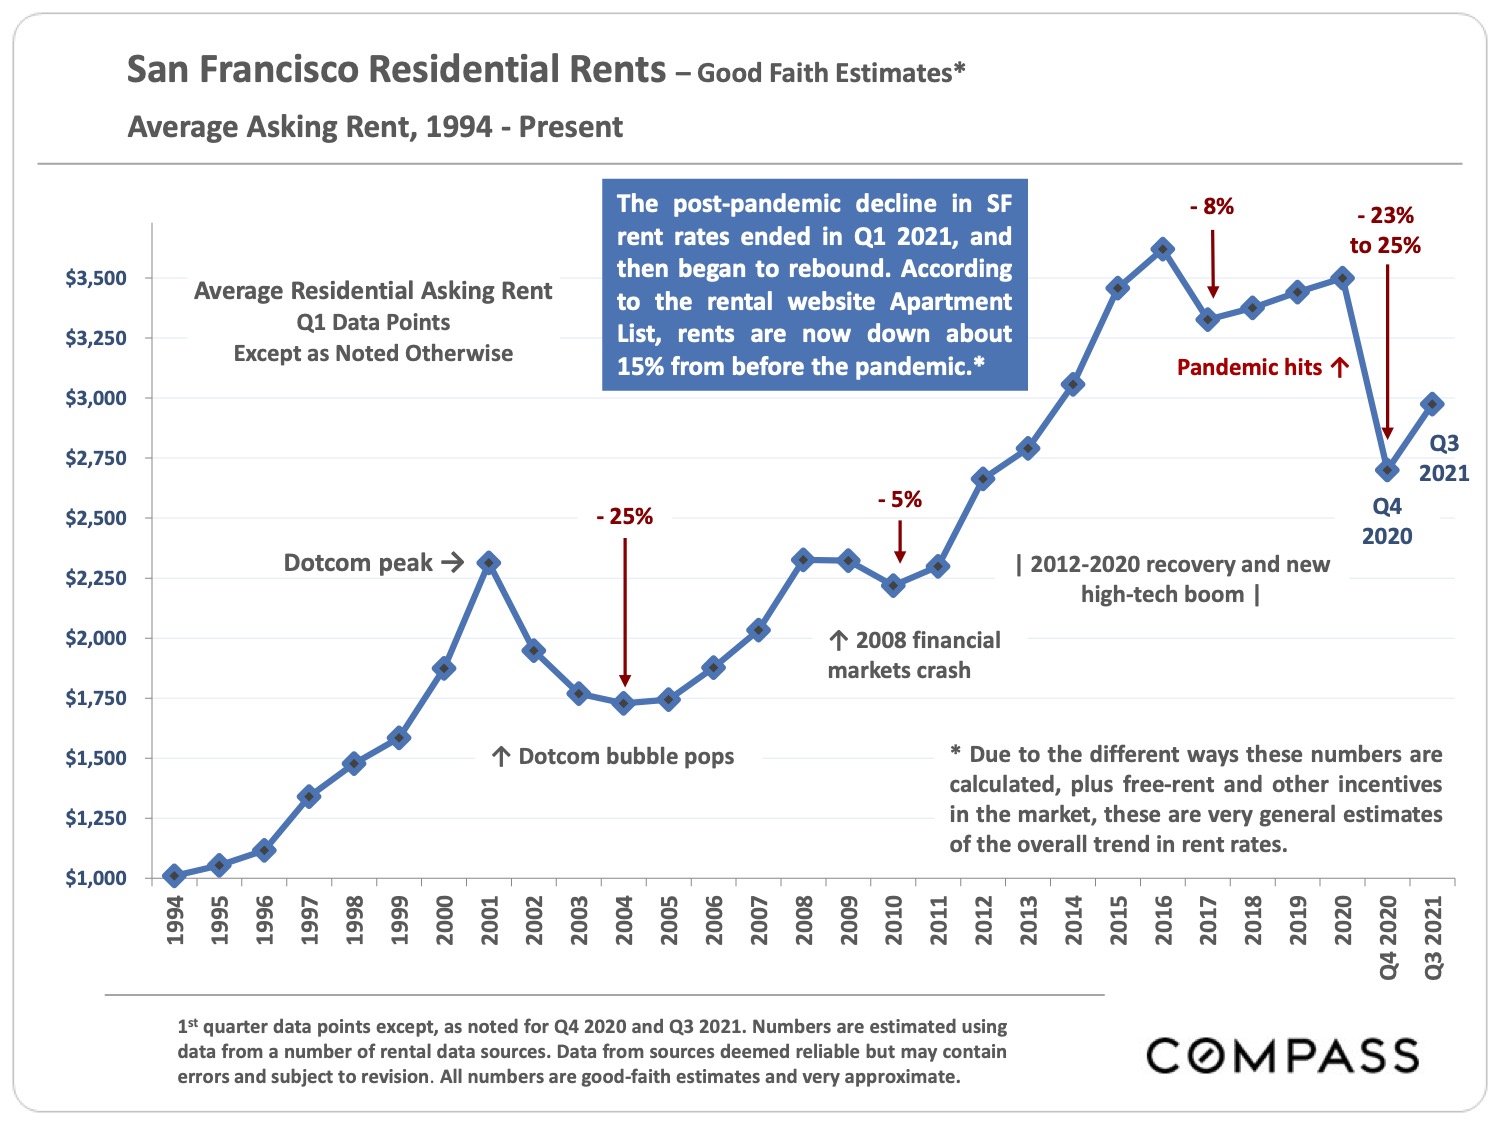 San Francisco Residential Rents - Good Faith Estimates - Average Asking Rents, 1994 - Present